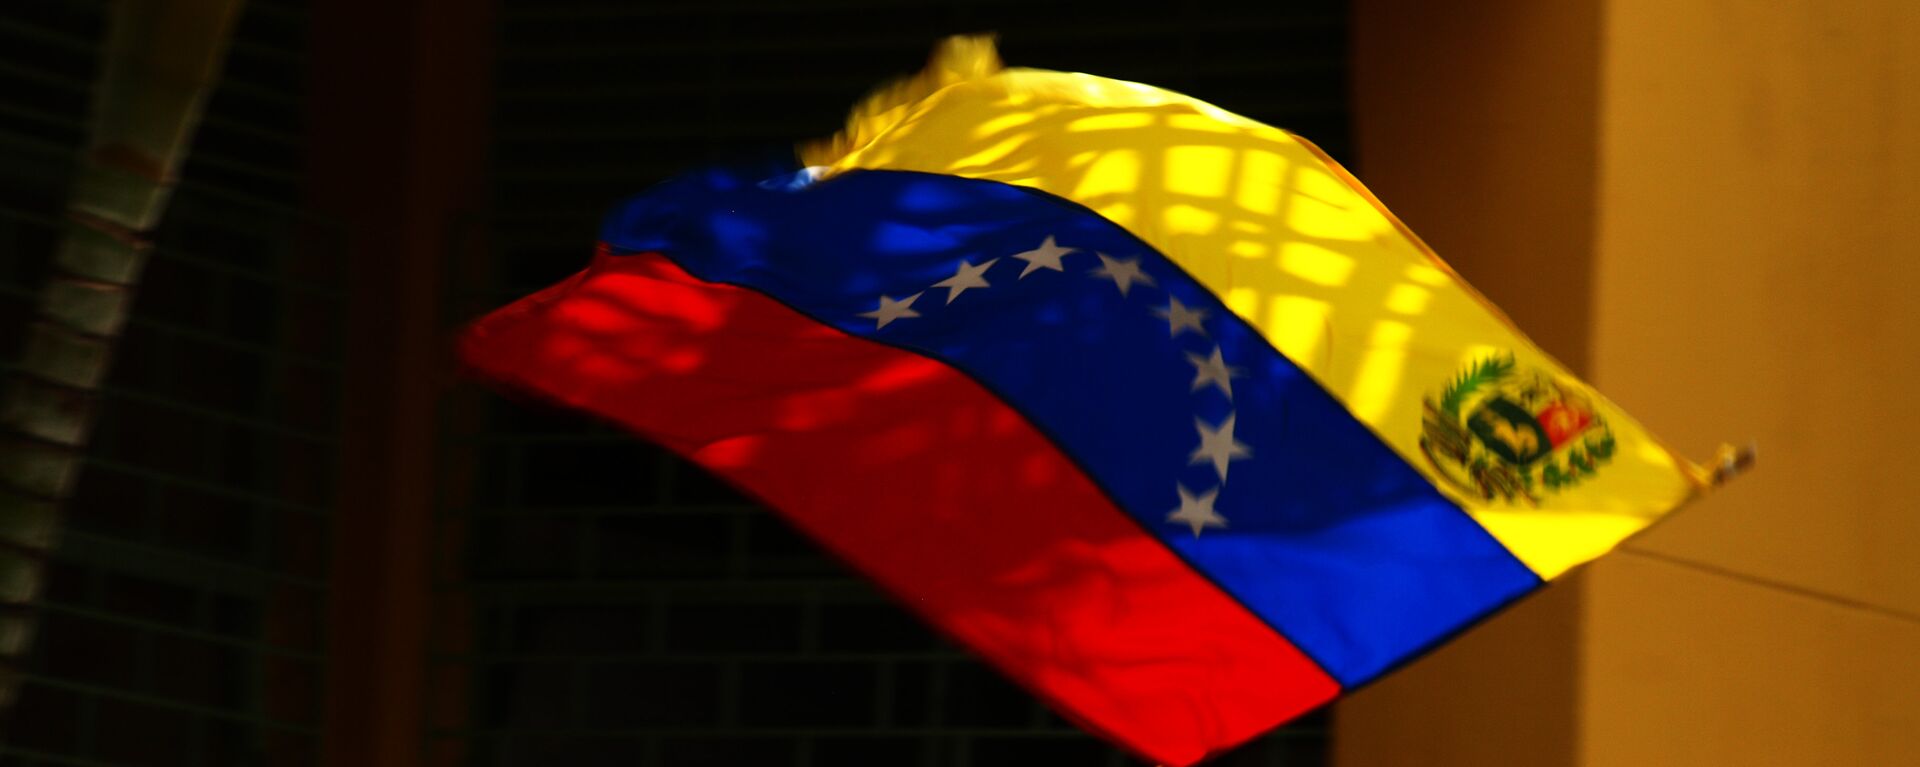 Bandera de Venezuela - Sputnik Mundo, 1920, 16.10.2021